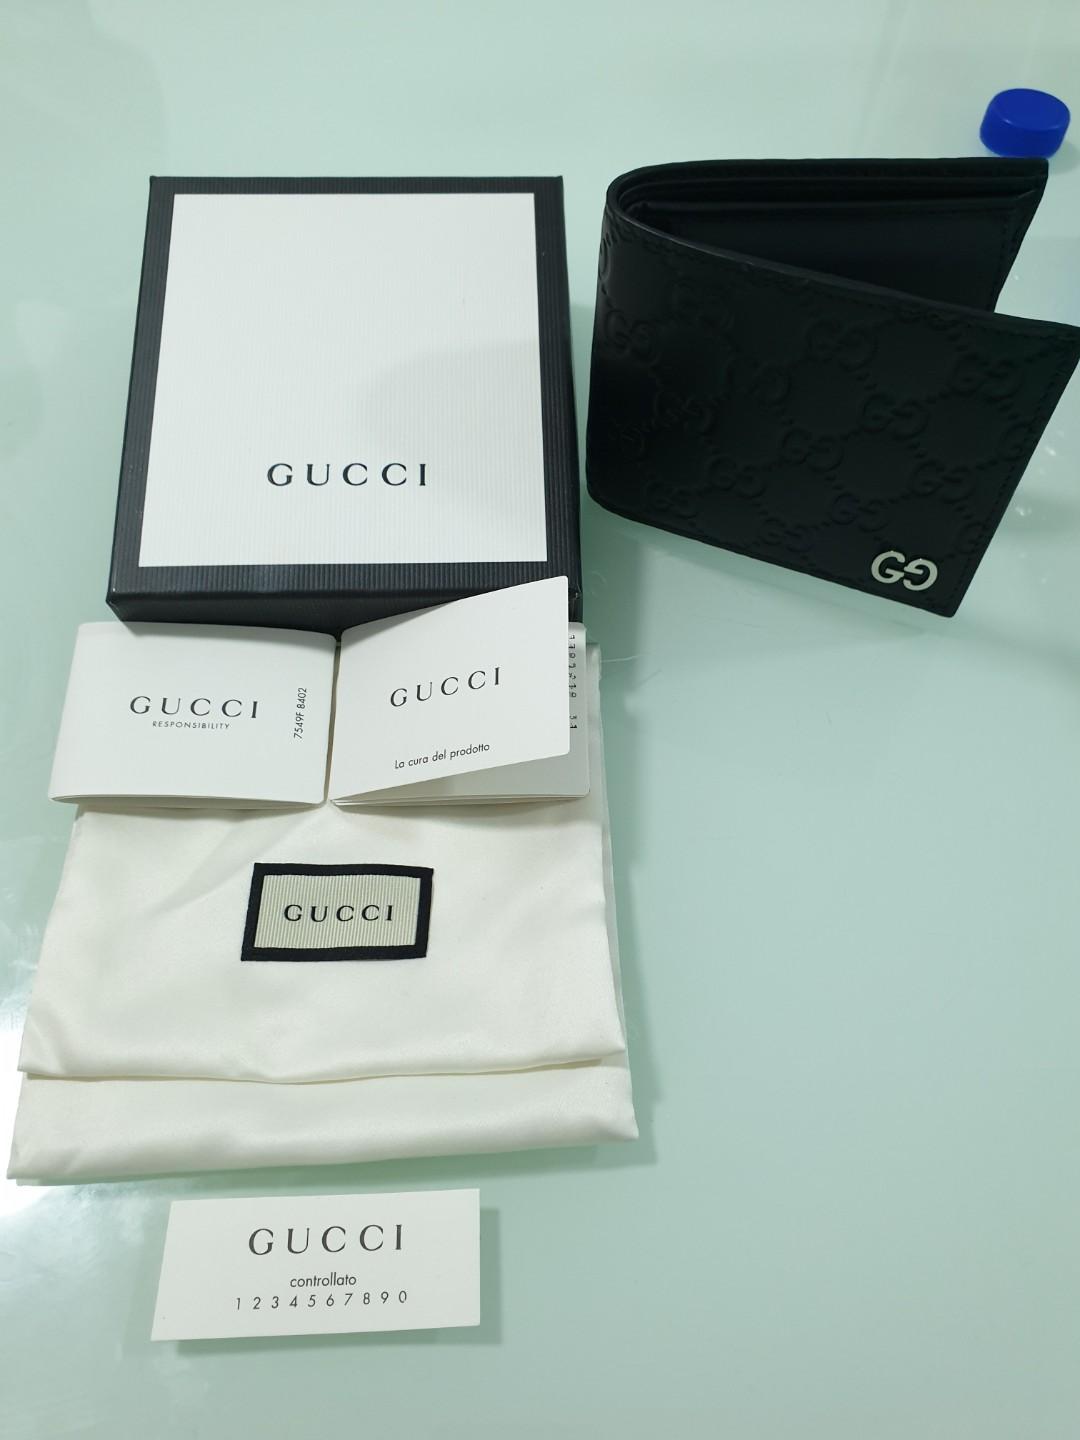 gucci wallet 7549f 8402